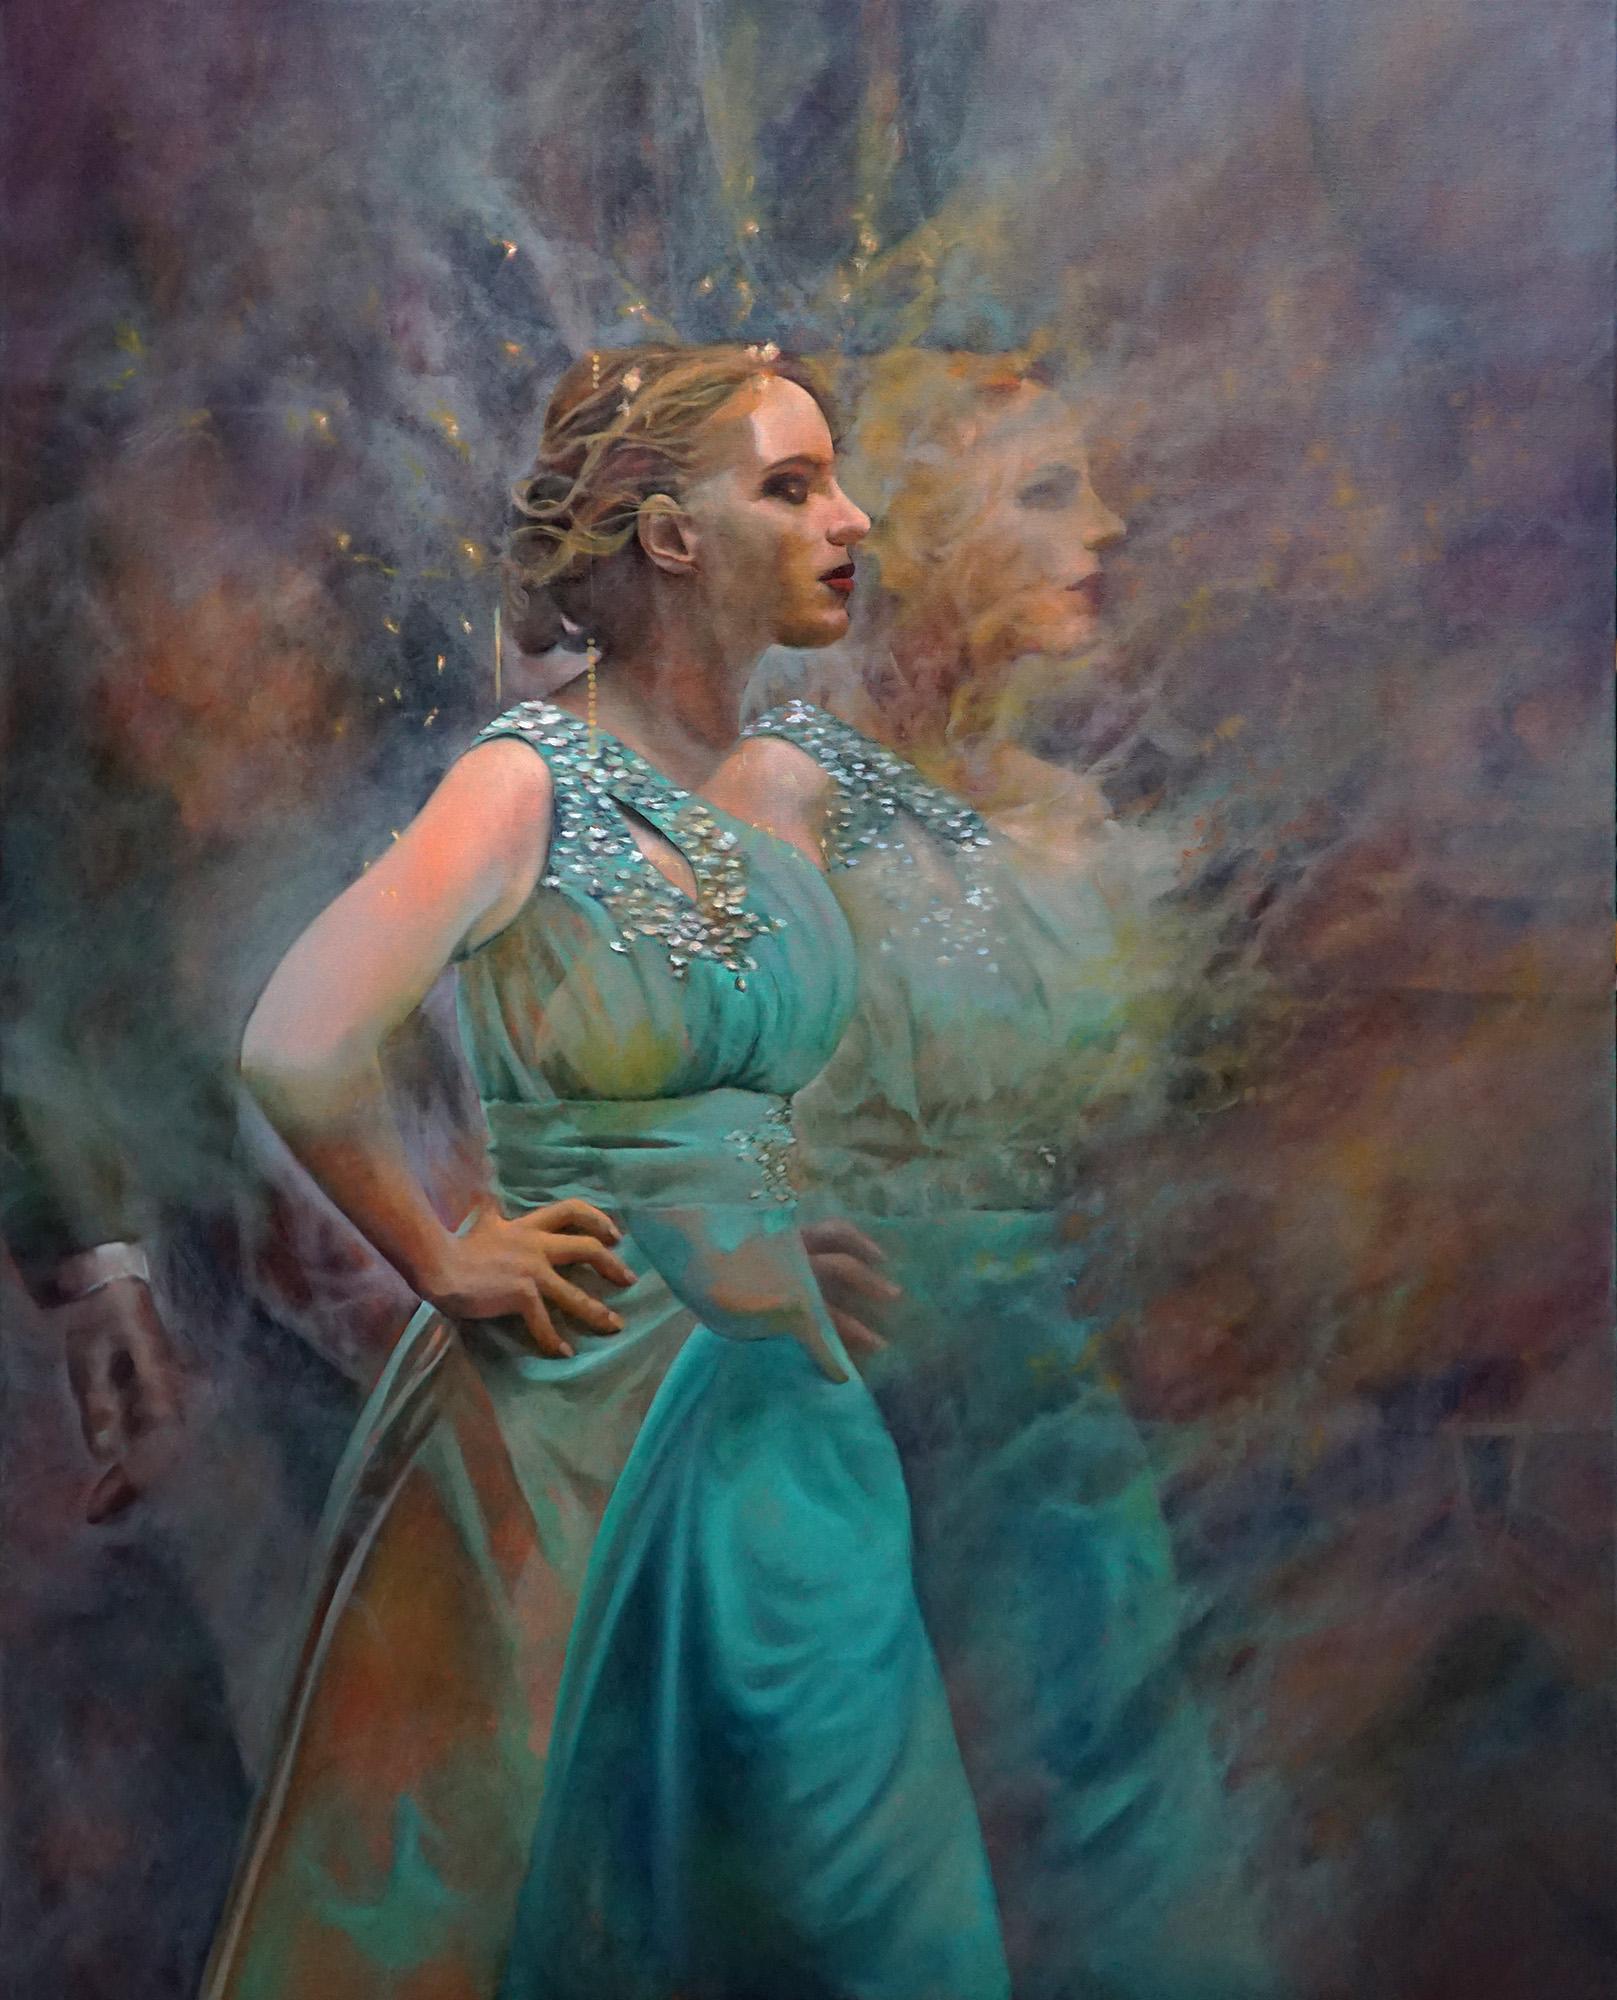 Maria Matveyeva Figurative Painting – Her Majesty the Muse figuratives Interieurgemälde mintgrüner weiblicher Erfolg Liebesliebe